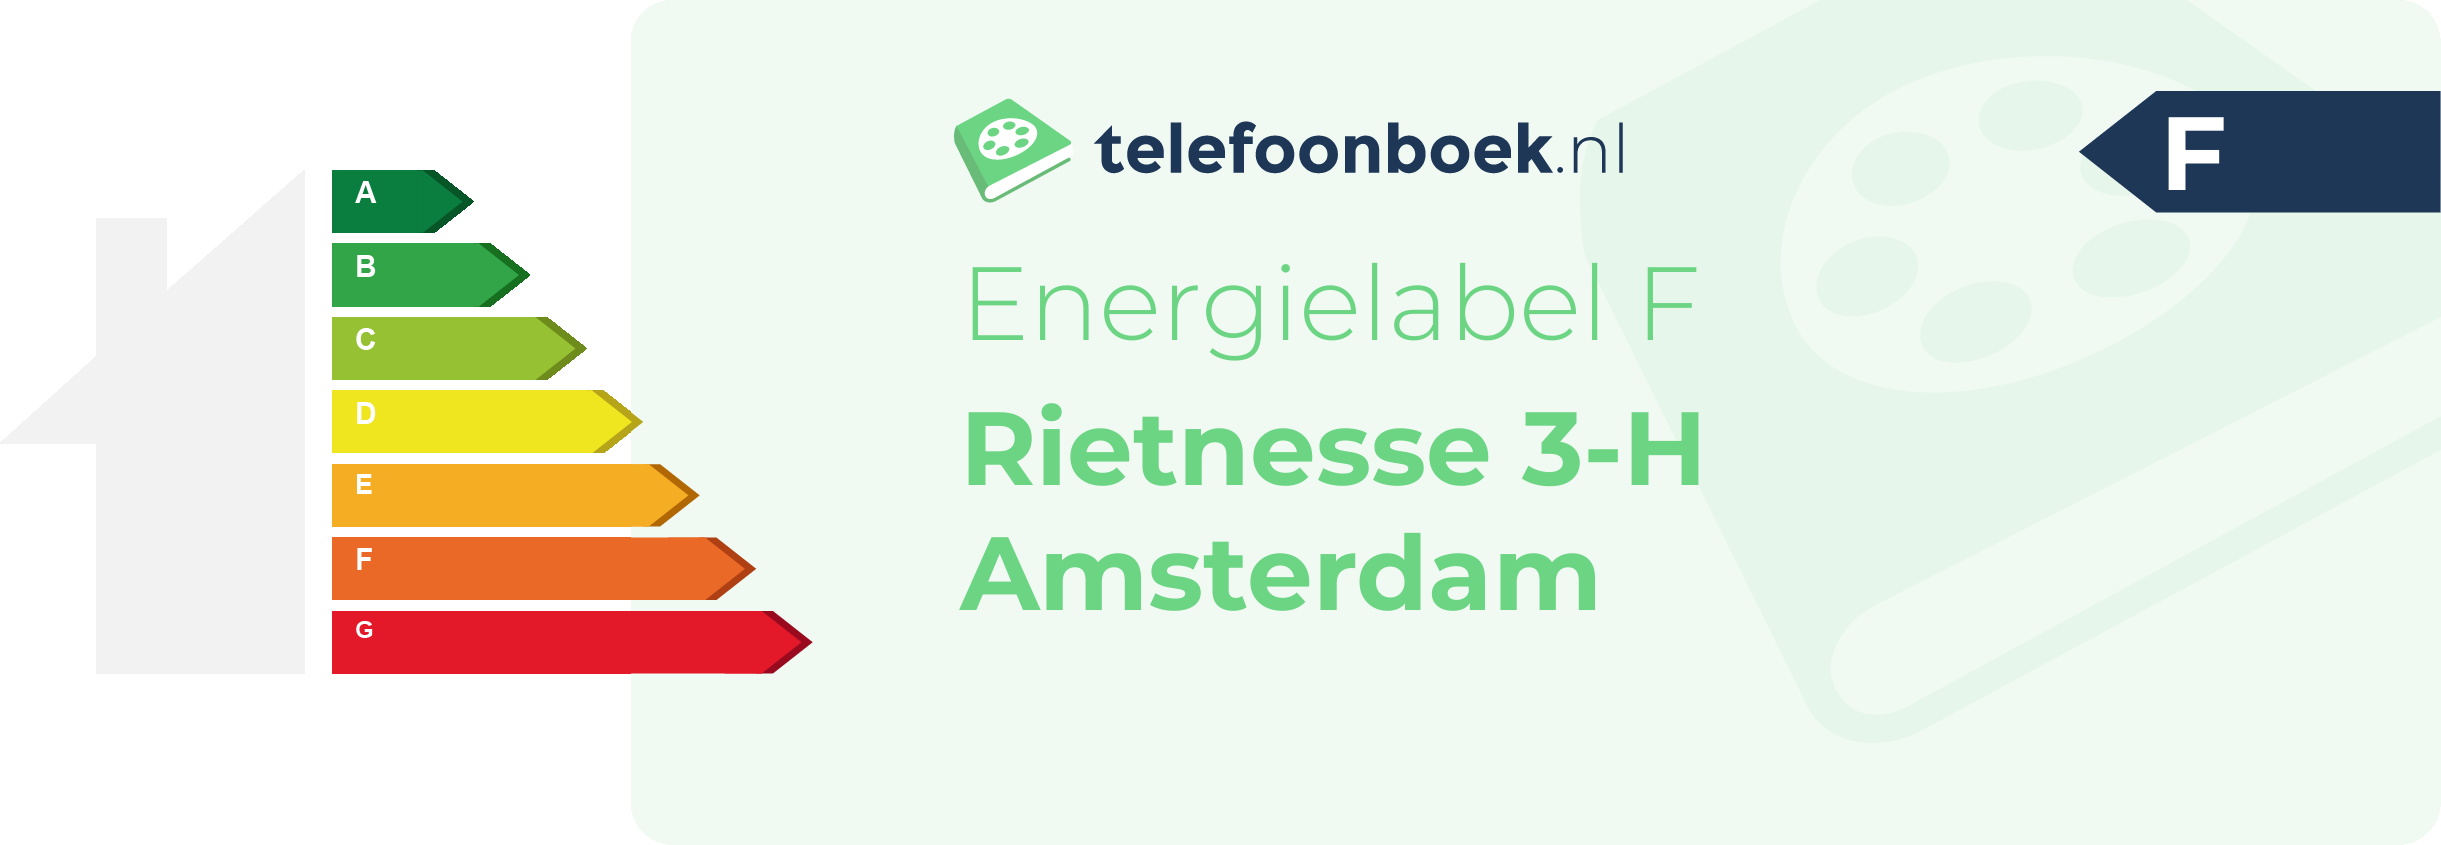 Energielabel Rietnesse 3-H Amsterdam